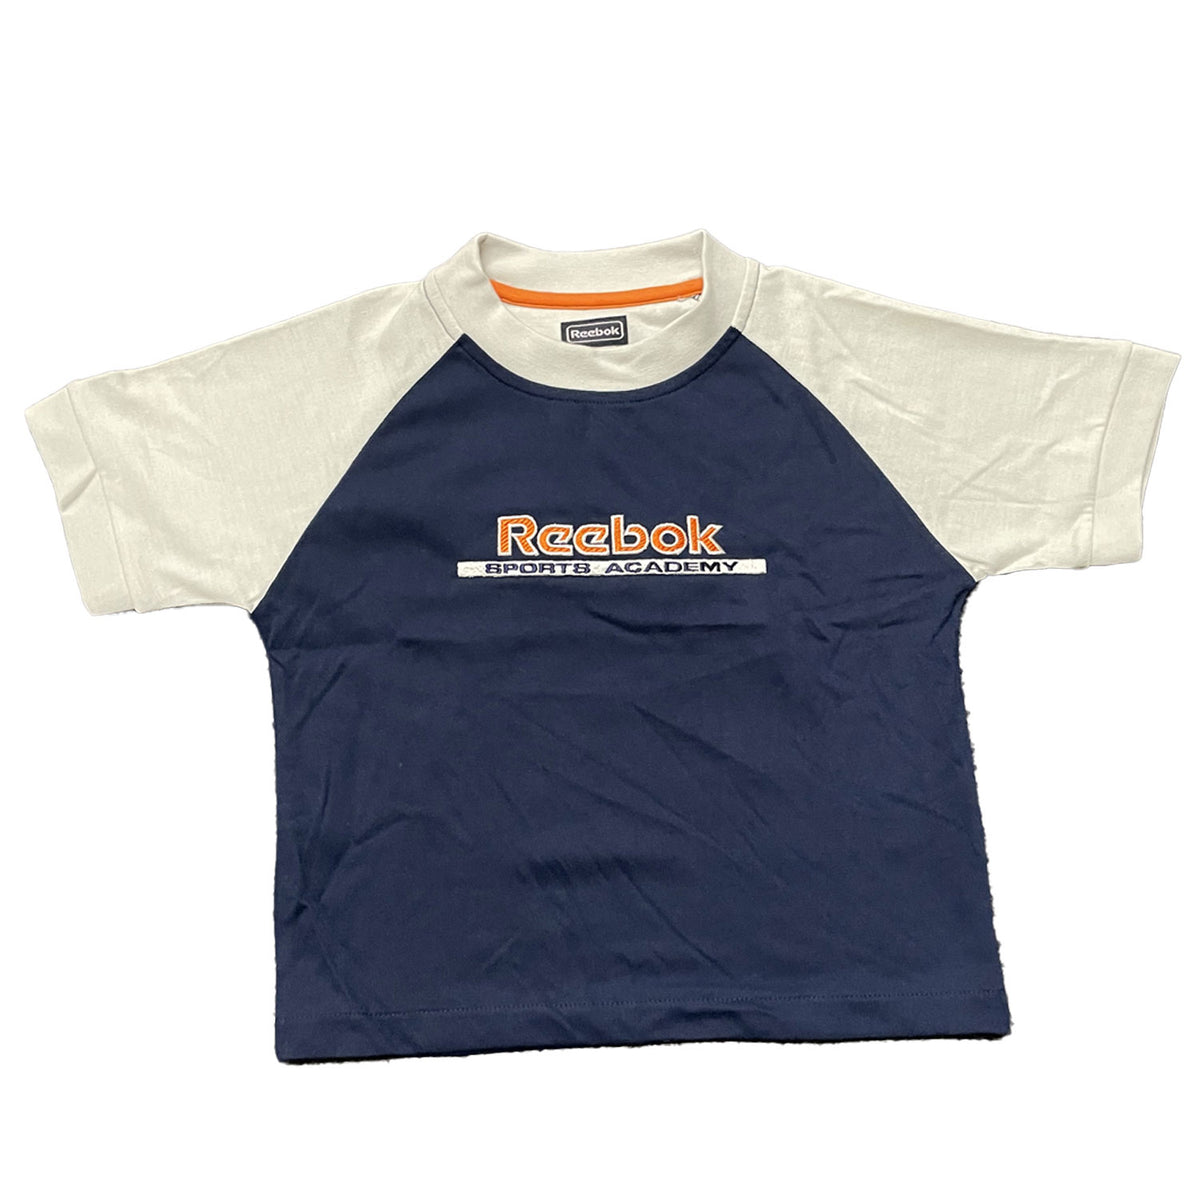 Reebok Sports Academy Infant T-Shirt 7